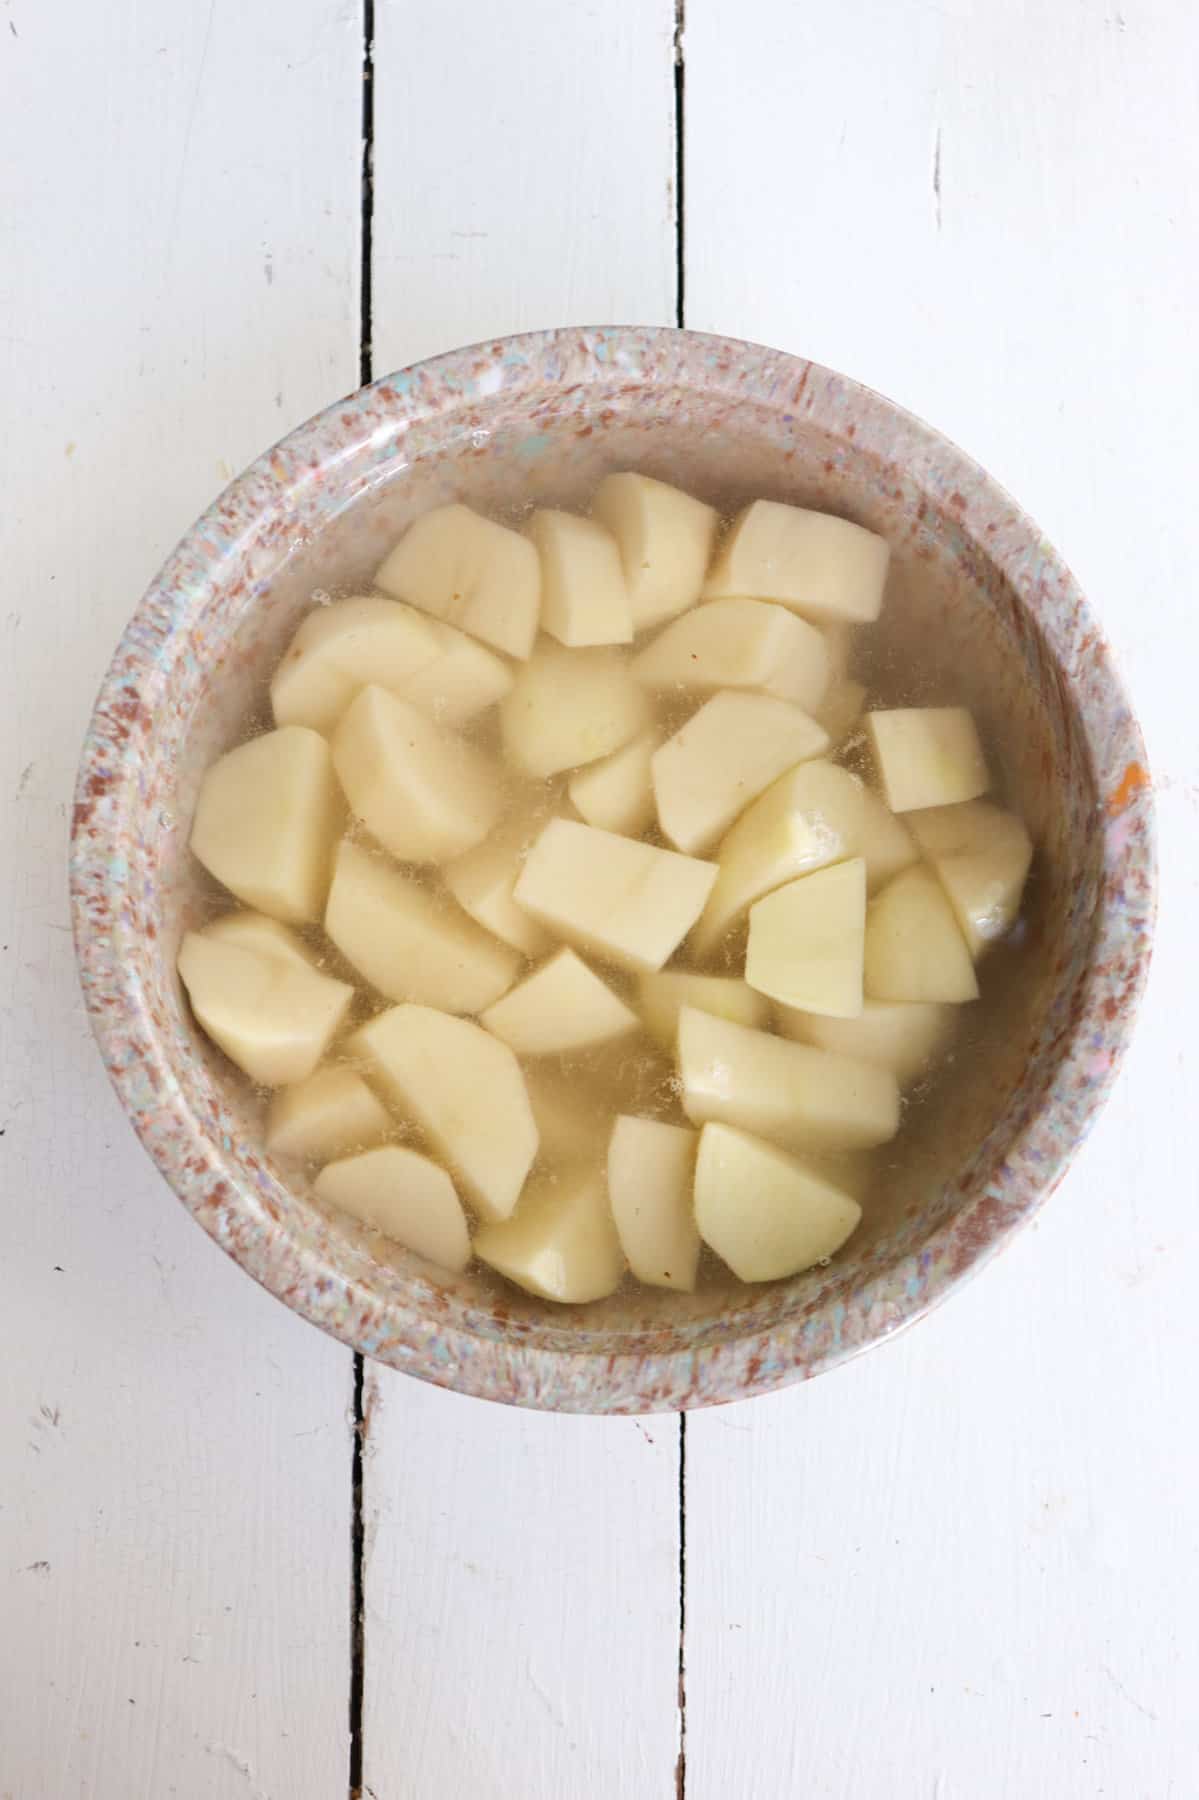 peeled potatoes soaking in water.